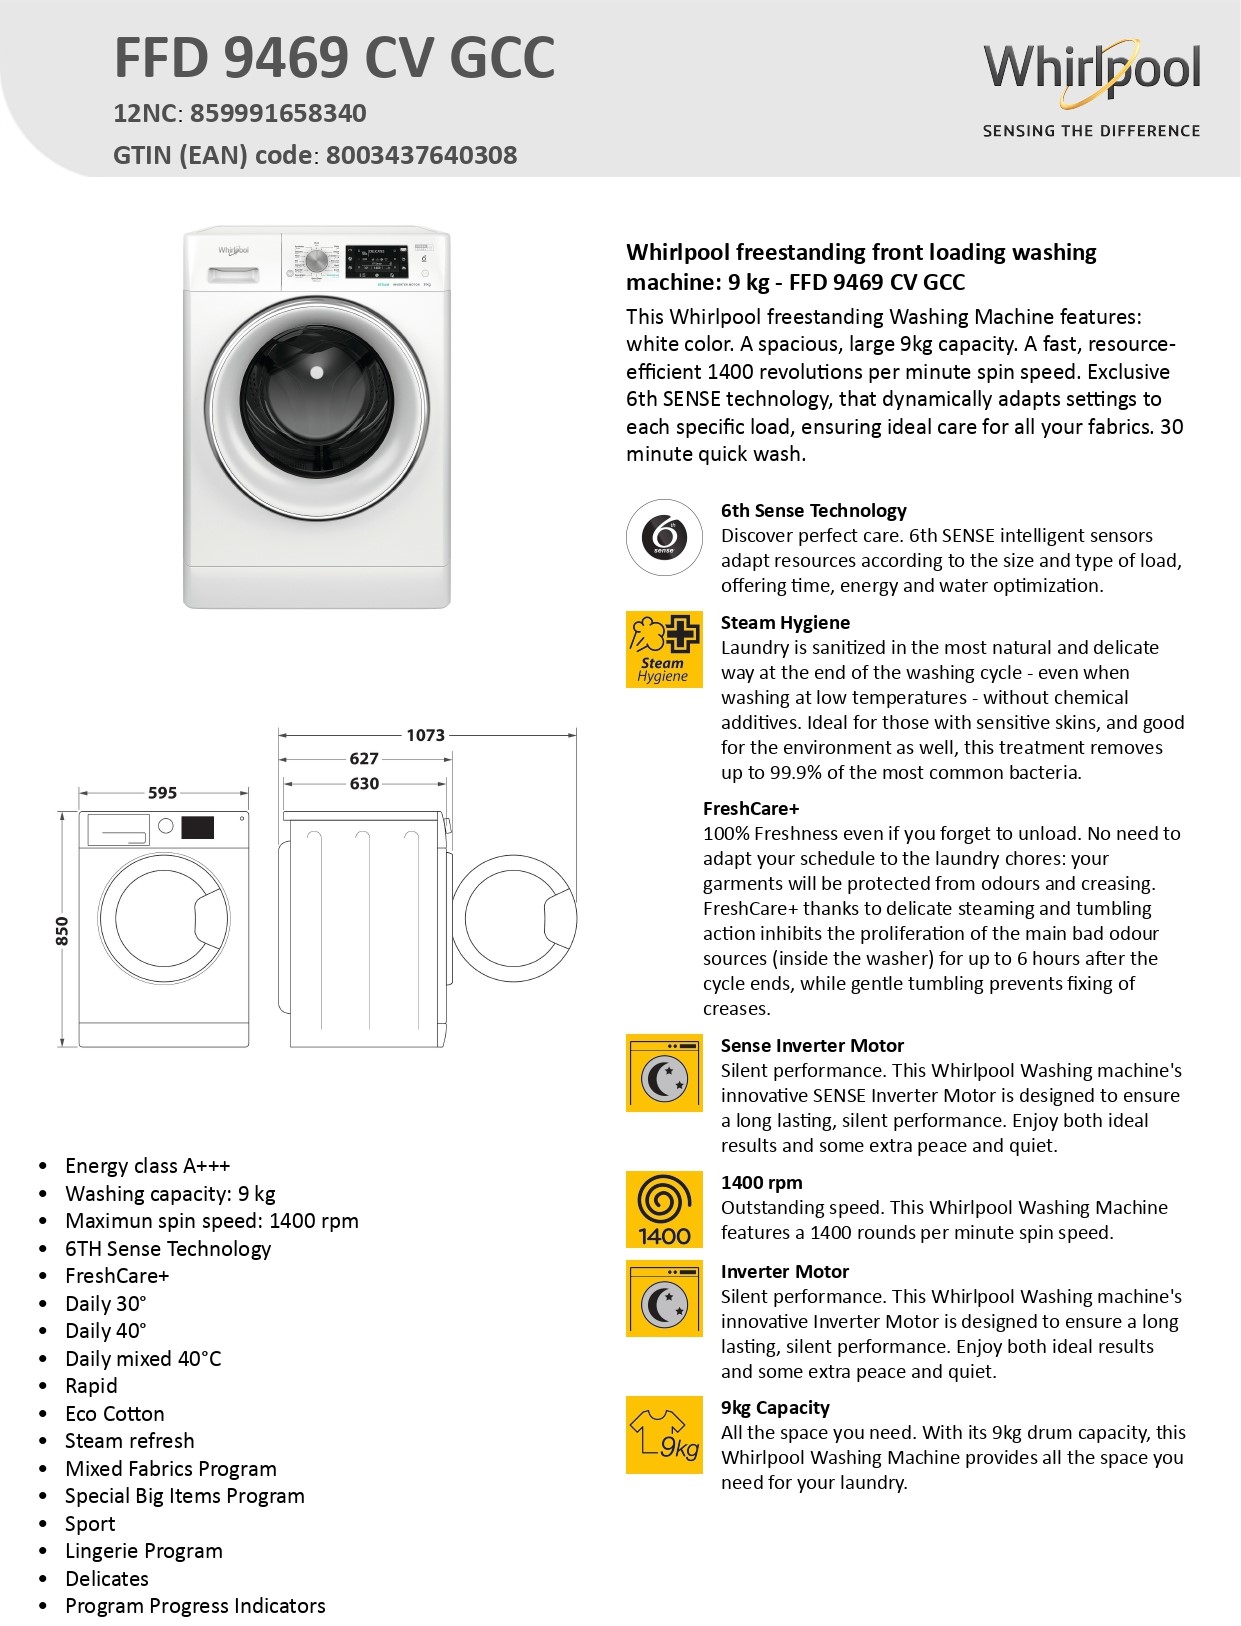 Whirlpool 9kg Front Load Washing Machine - FFD 9469 CV GCC